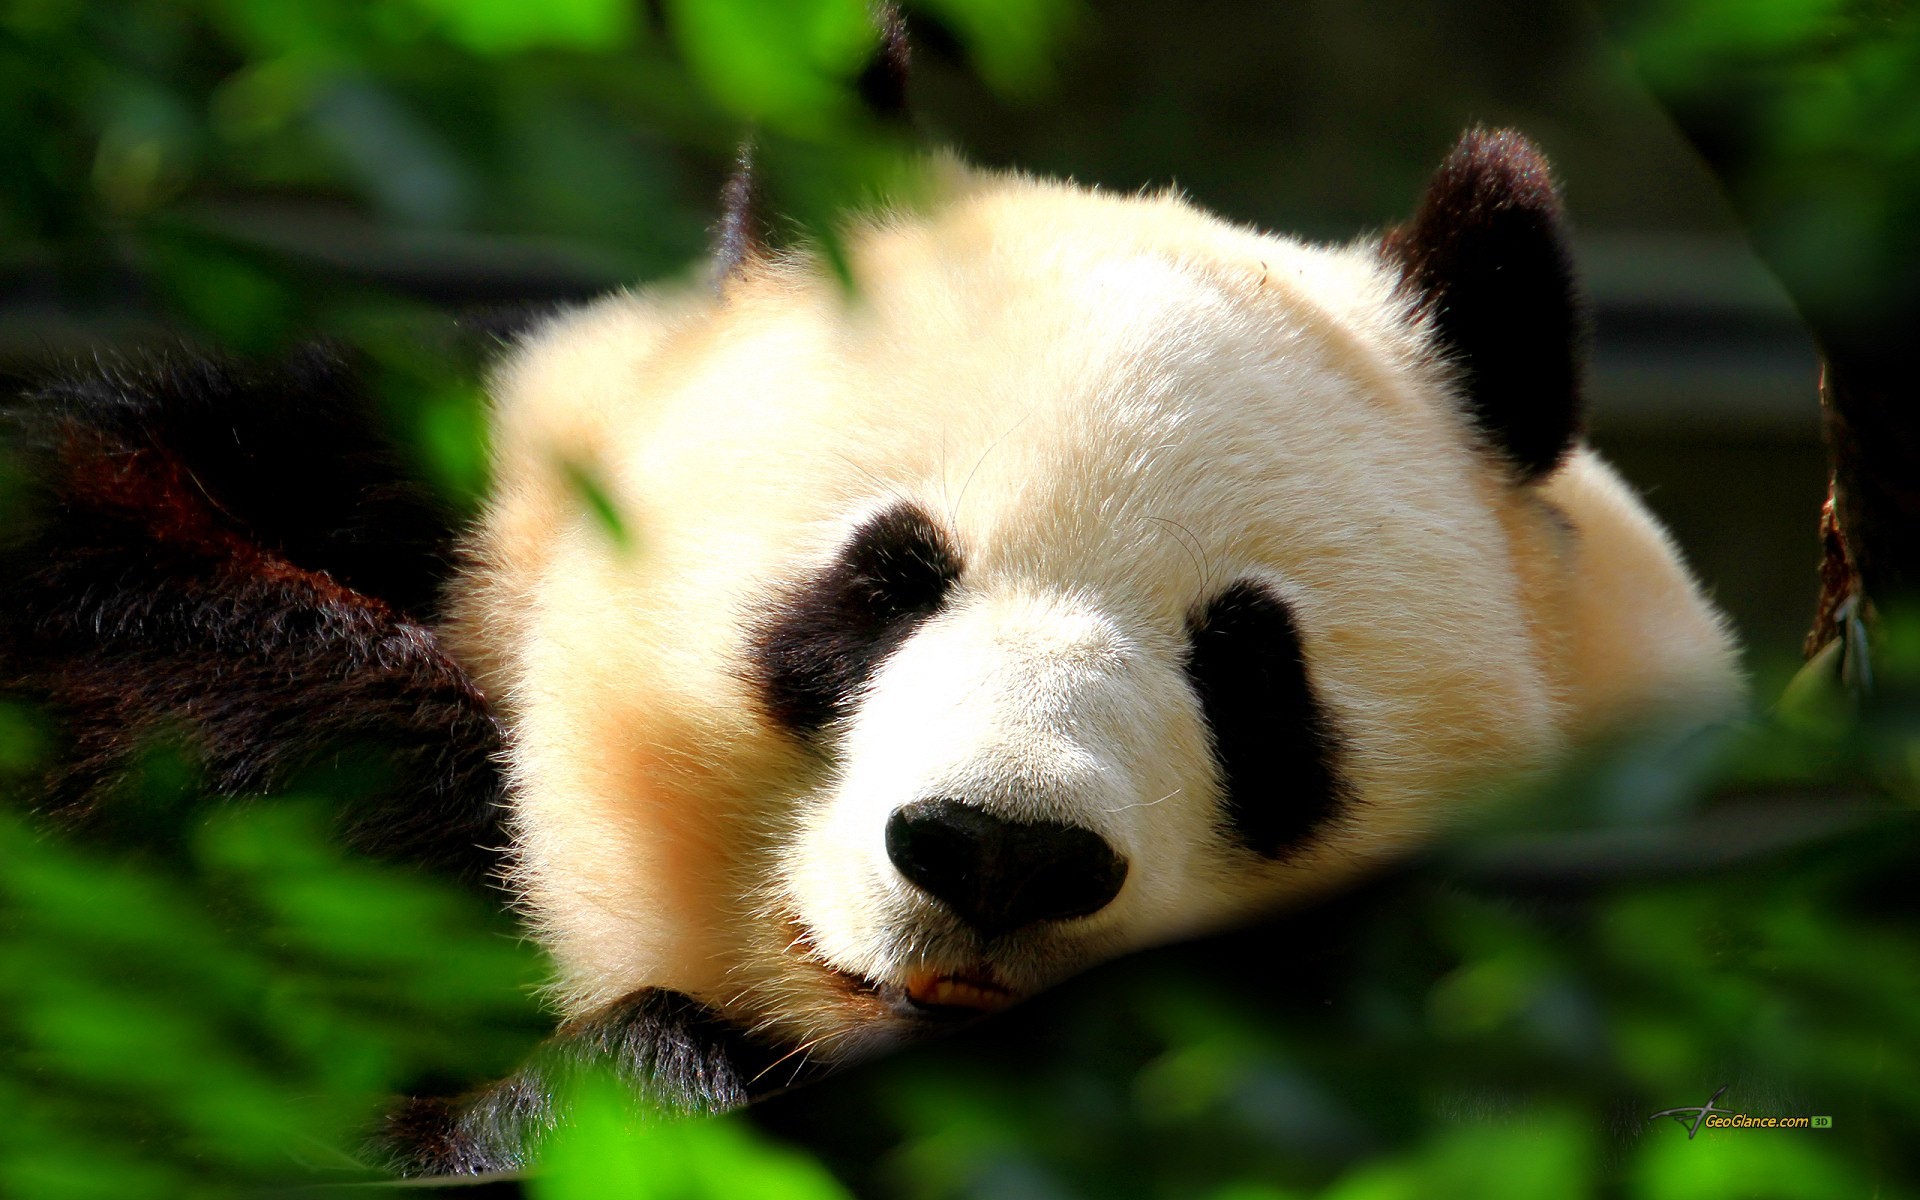 kung fu panda 3 free downlaod